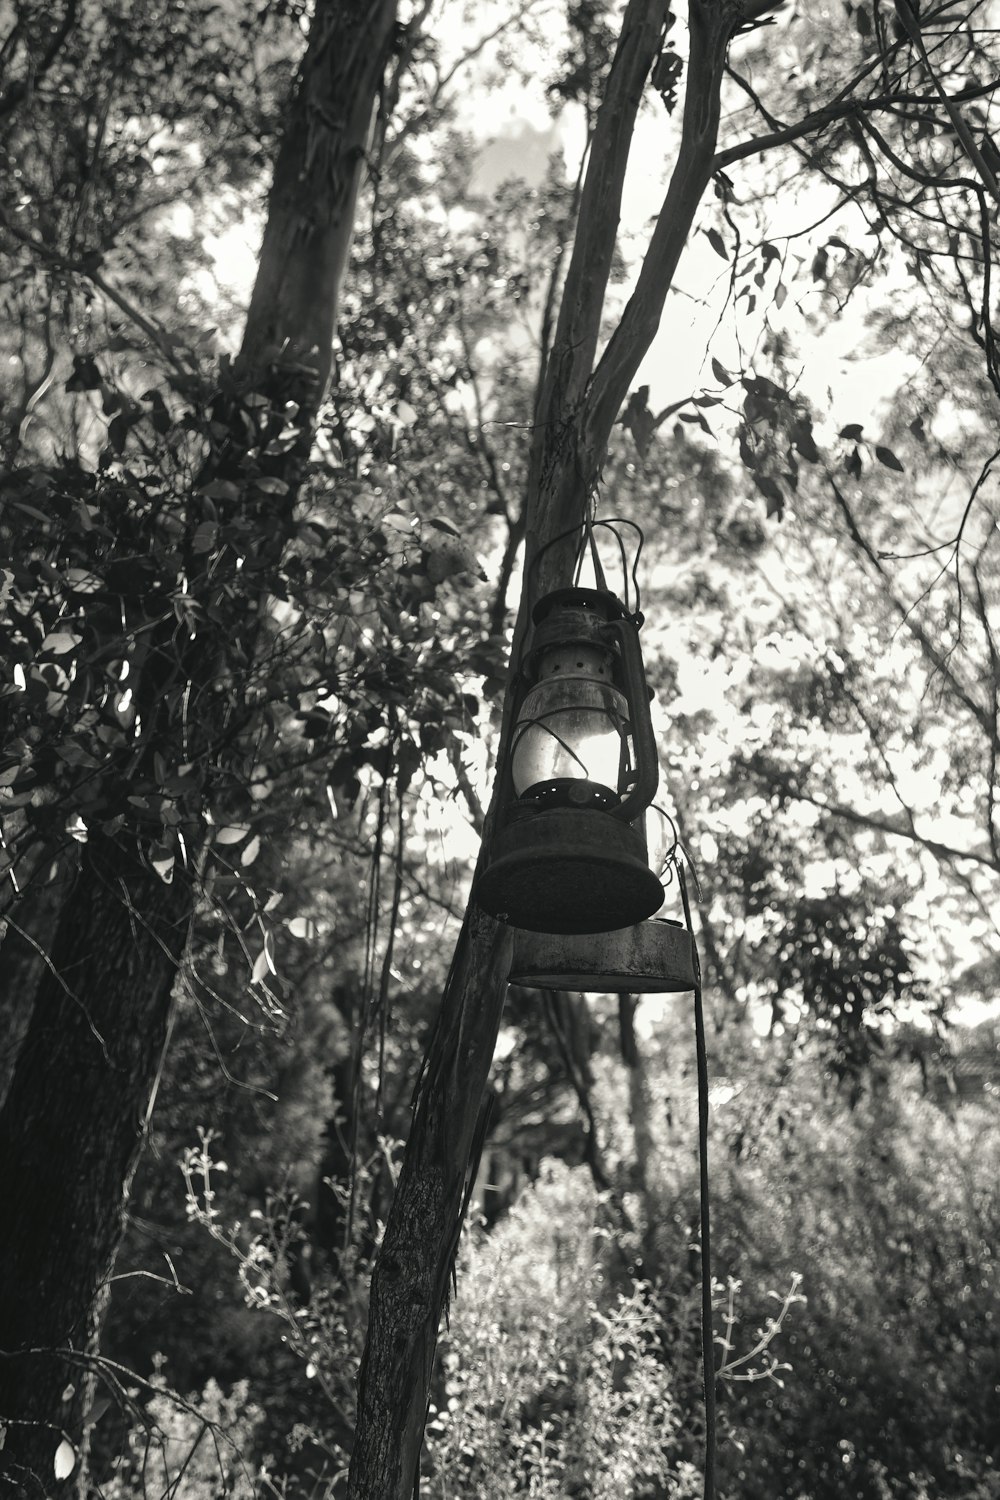 grayscale photo of lantern hanging on tree